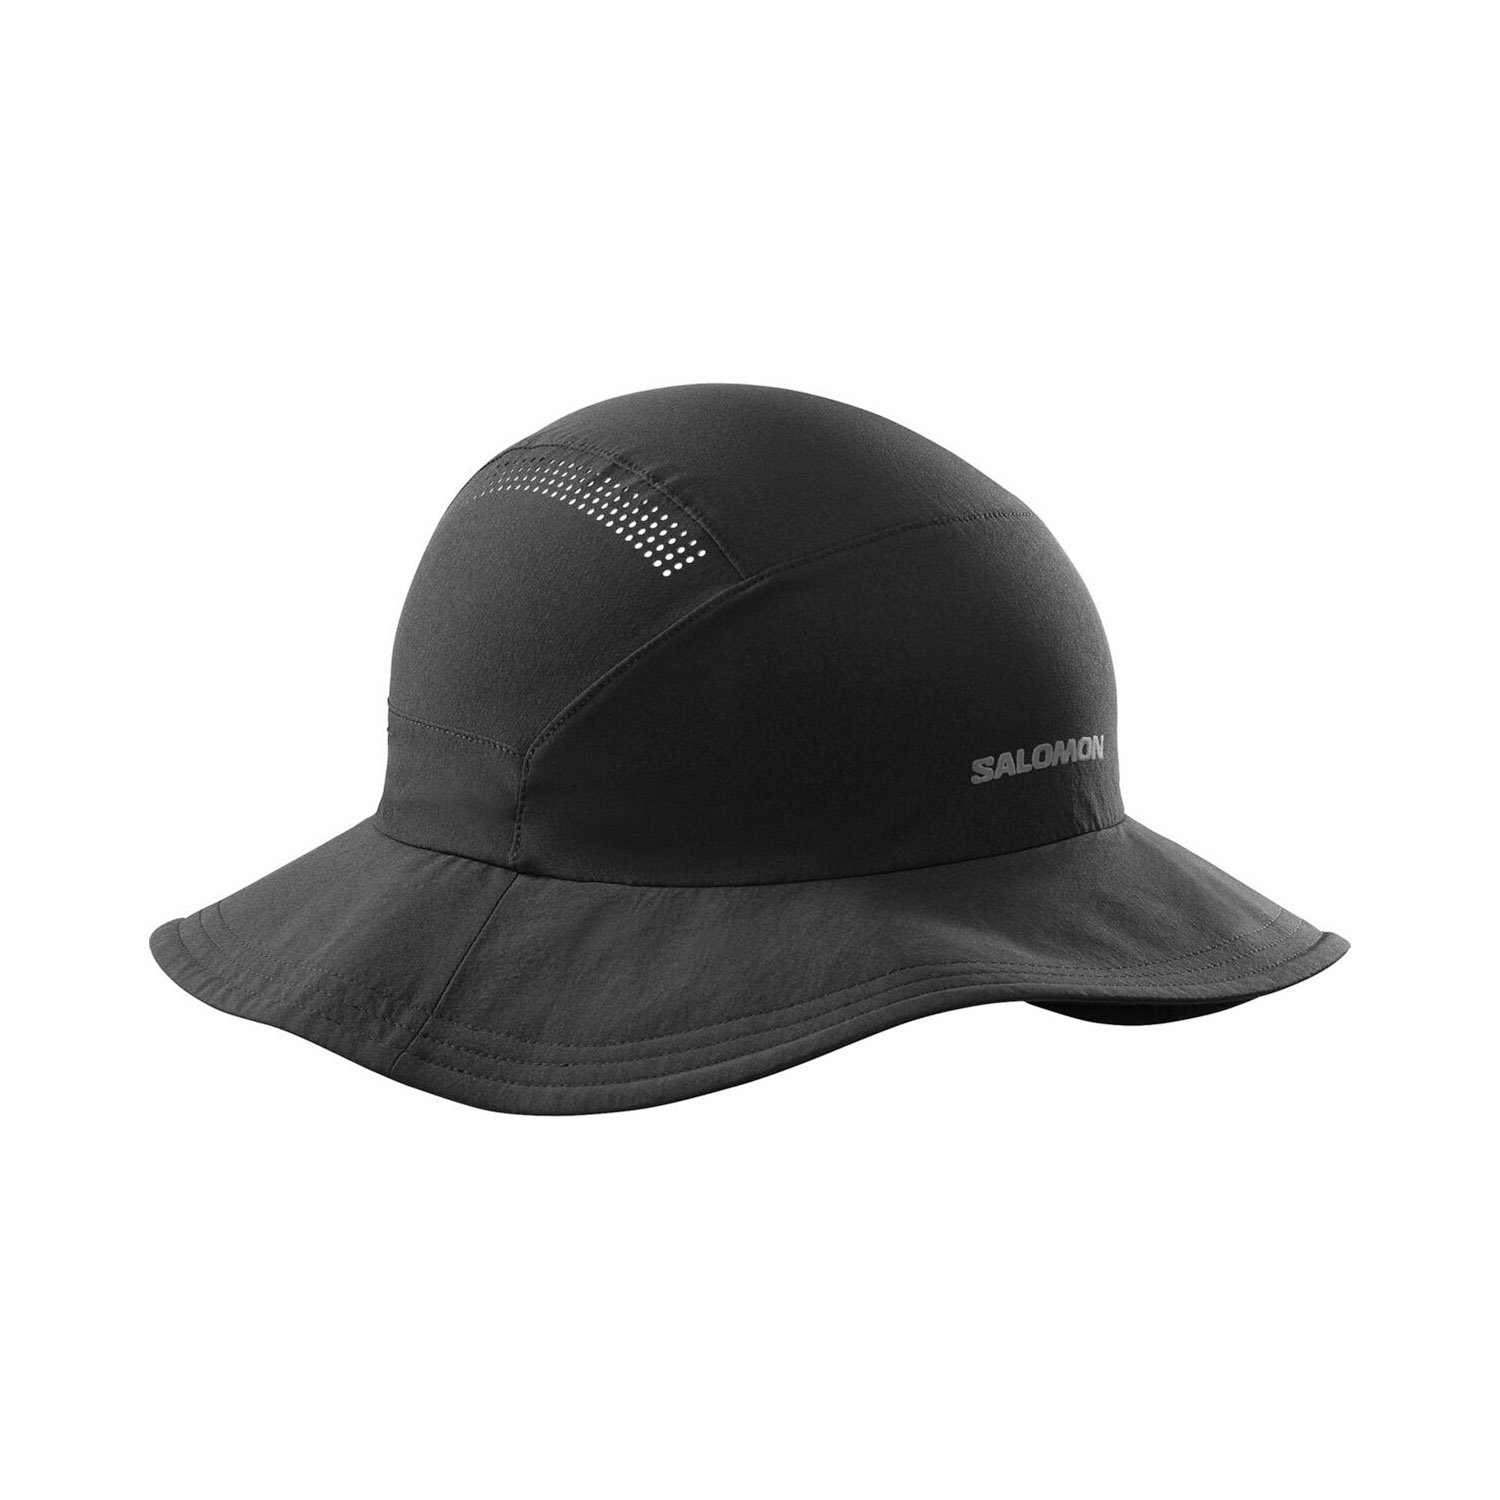 Salomon Mountain Hat Şapka - Siyah - 1